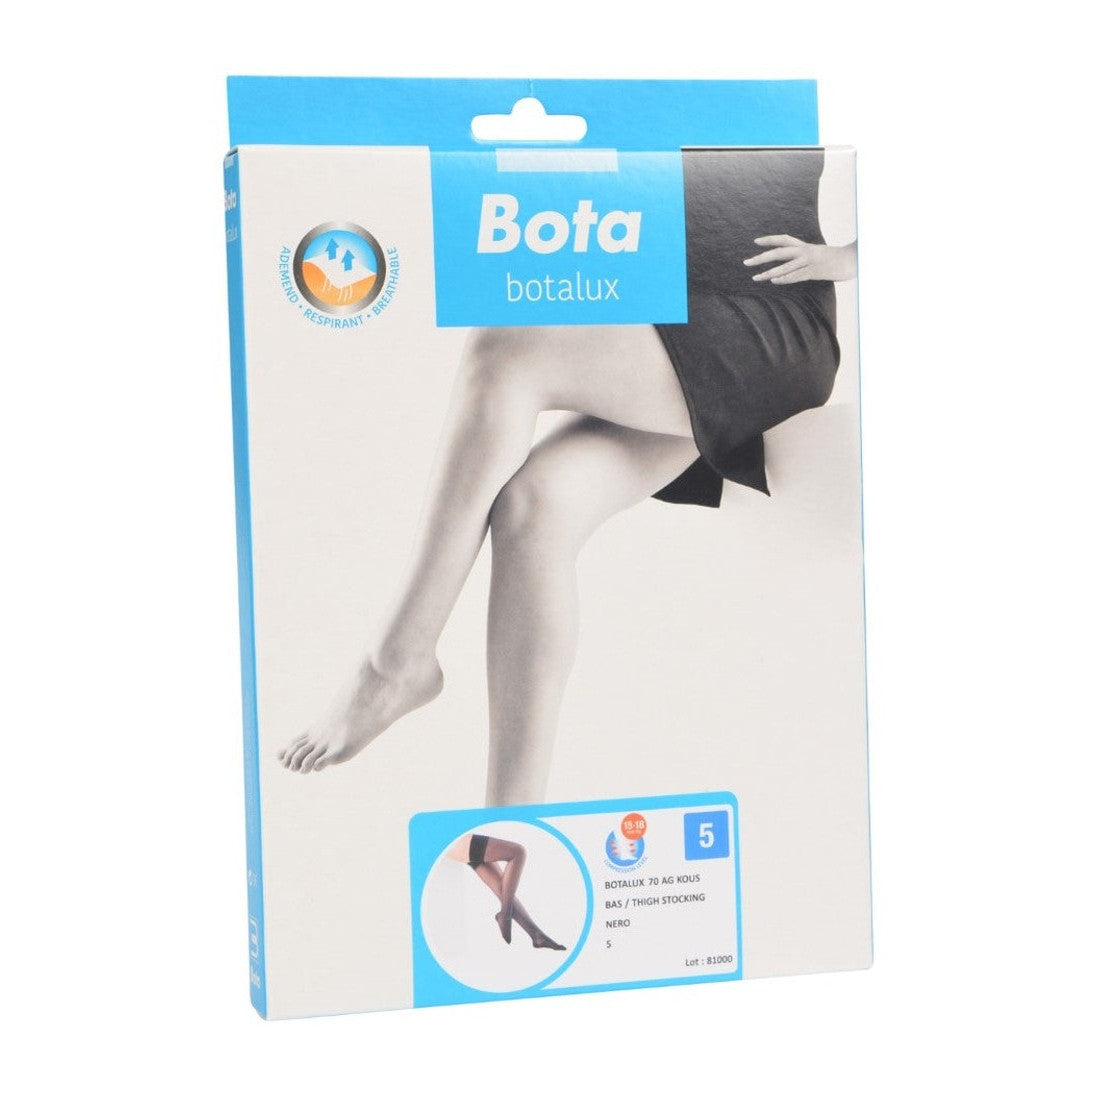 Botalux 70 support stocking ag nero - black 